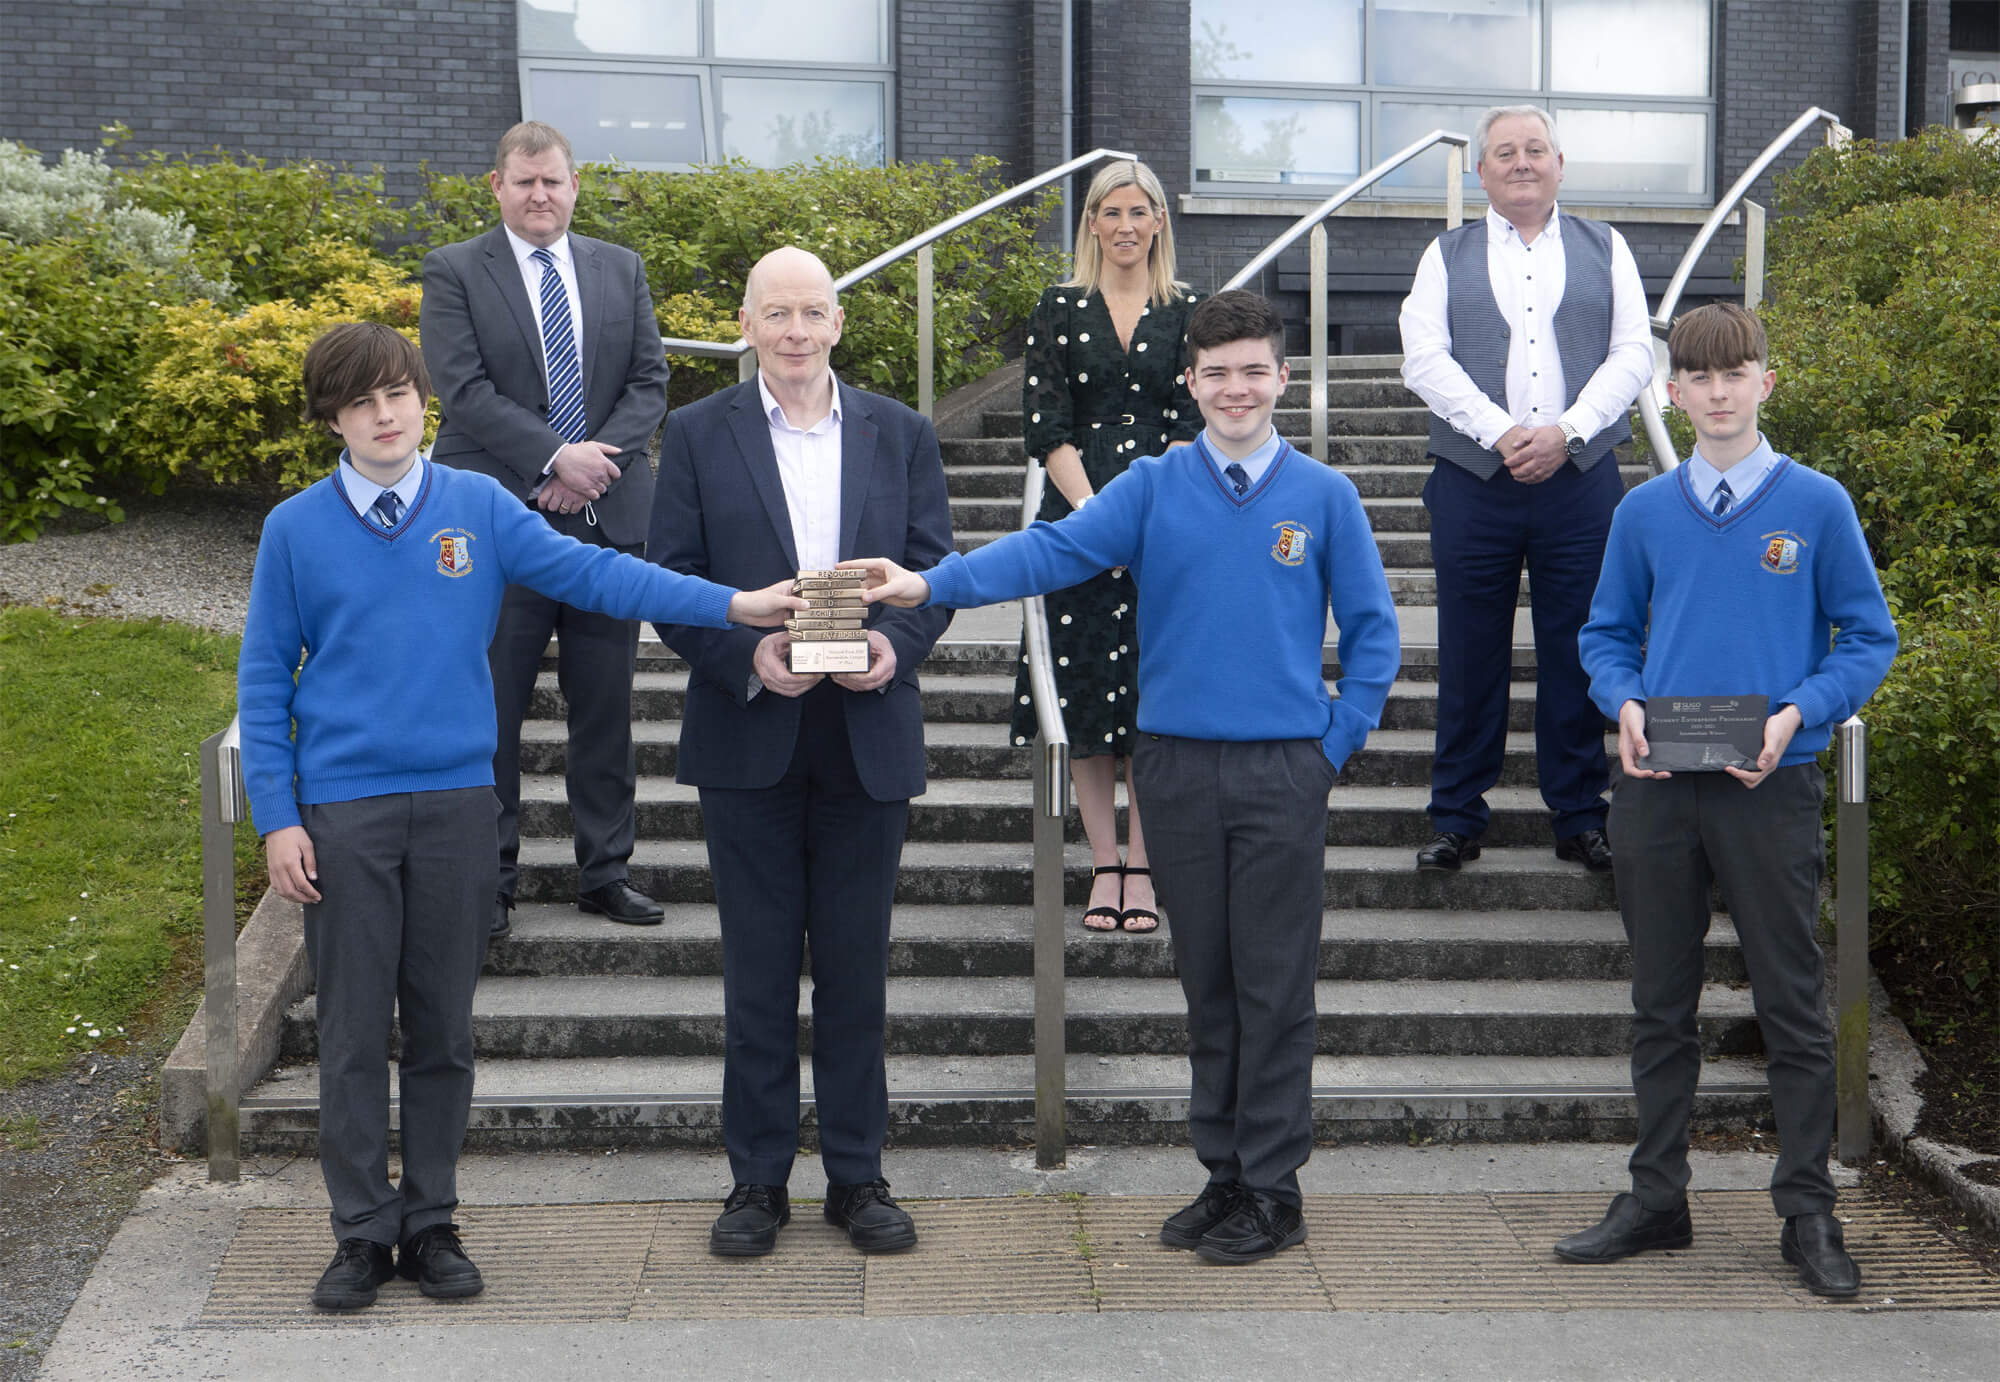 National Award for Sligo Students at Enterprise Finals